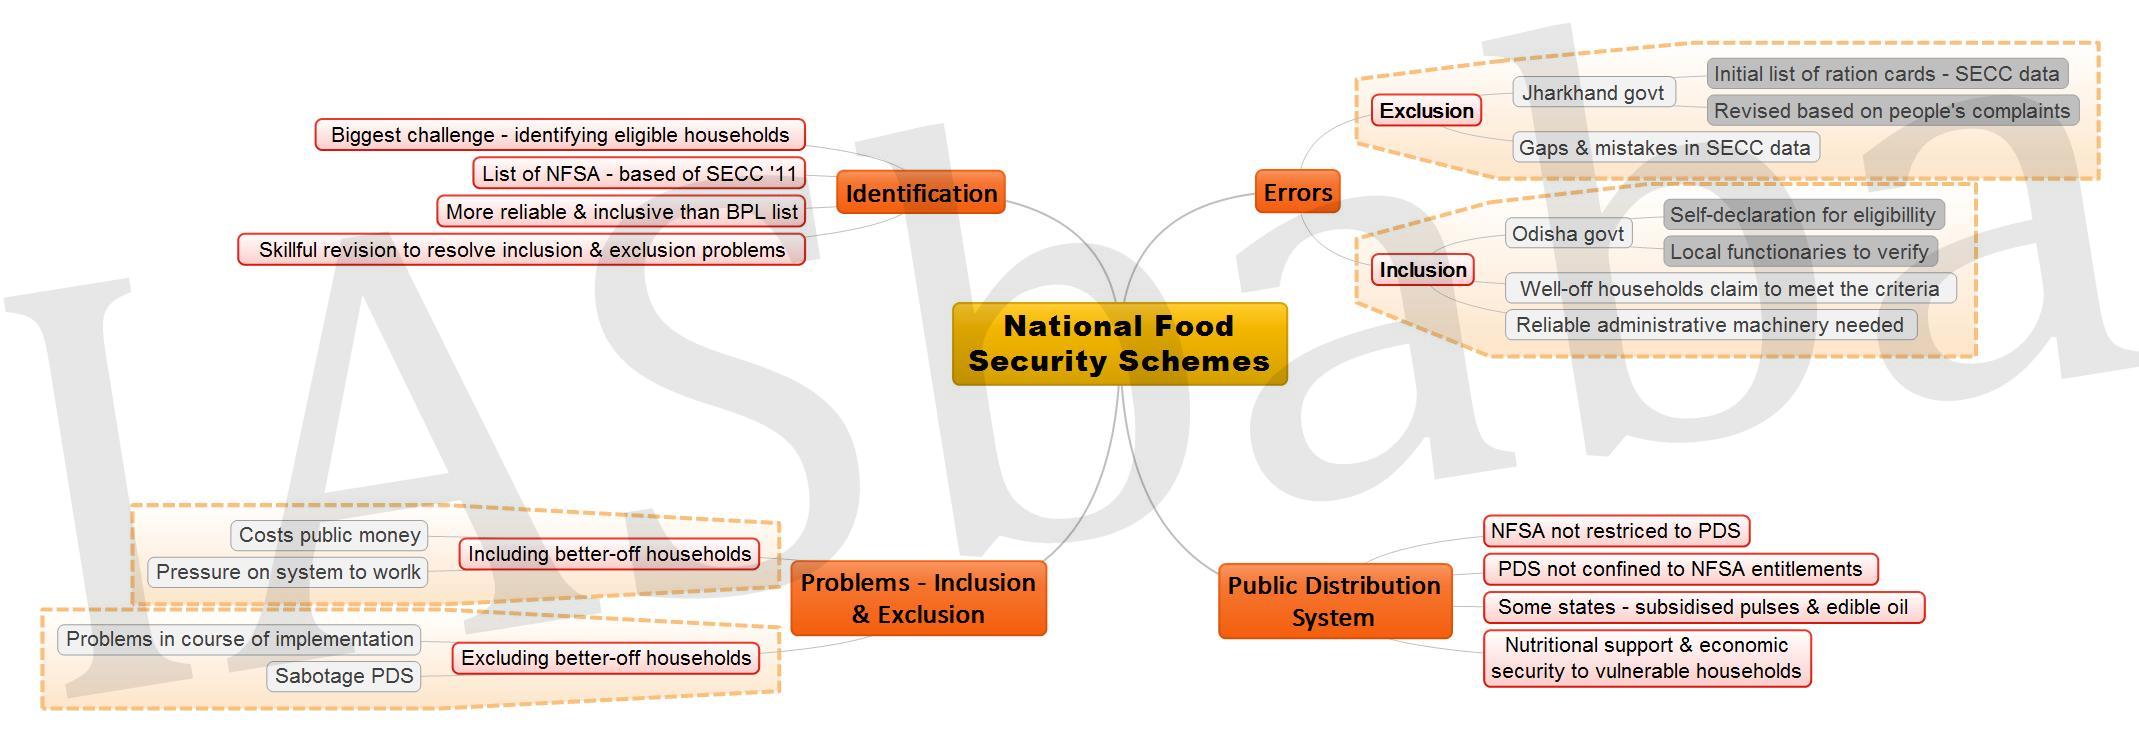 National Food Security Schemes JPEG